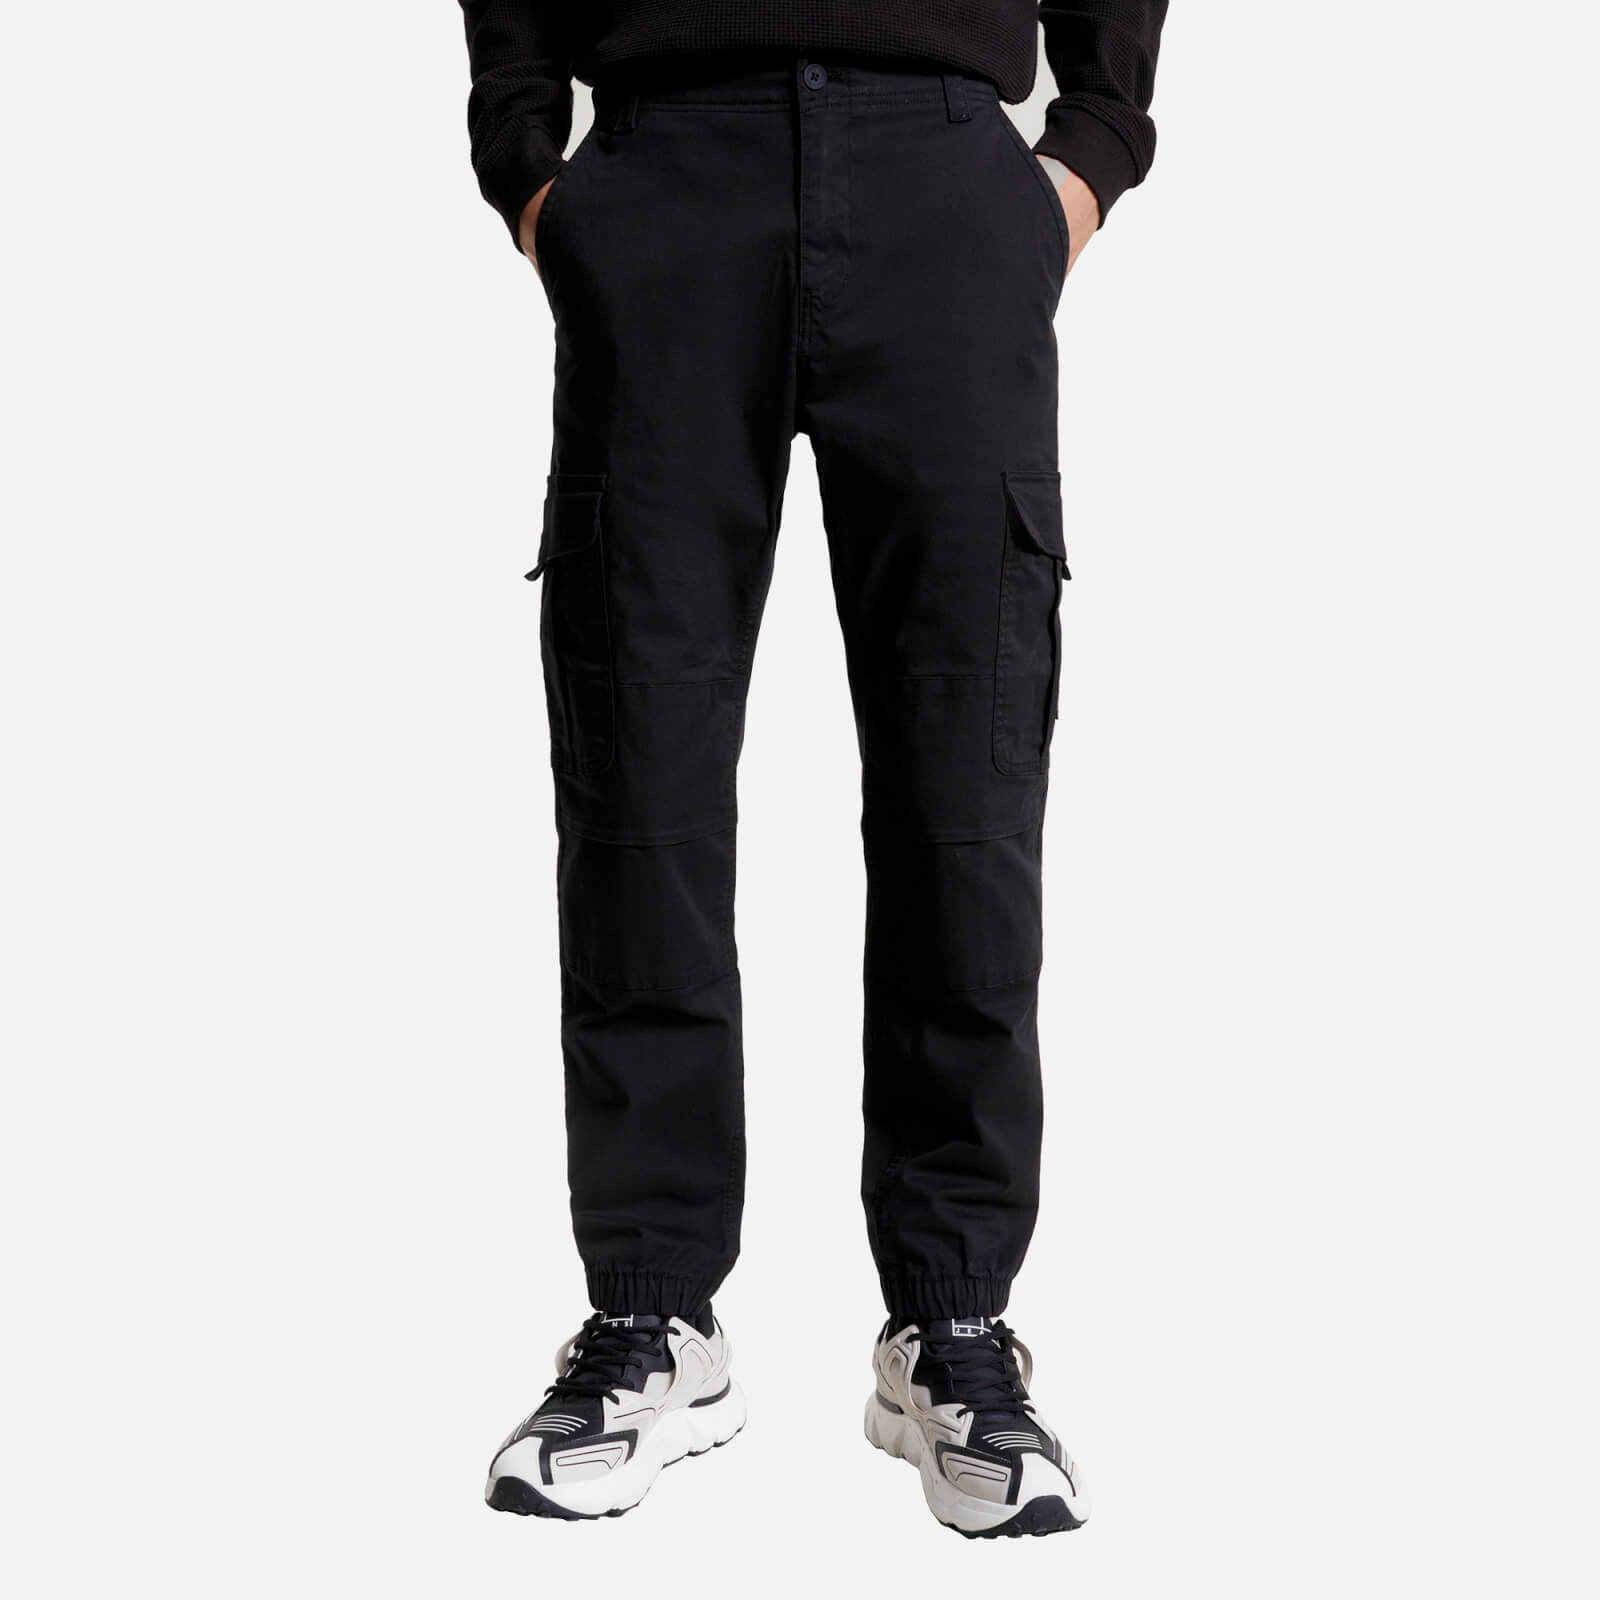 Tommy Jeans Men's Ethan Cargo Pants - Black product